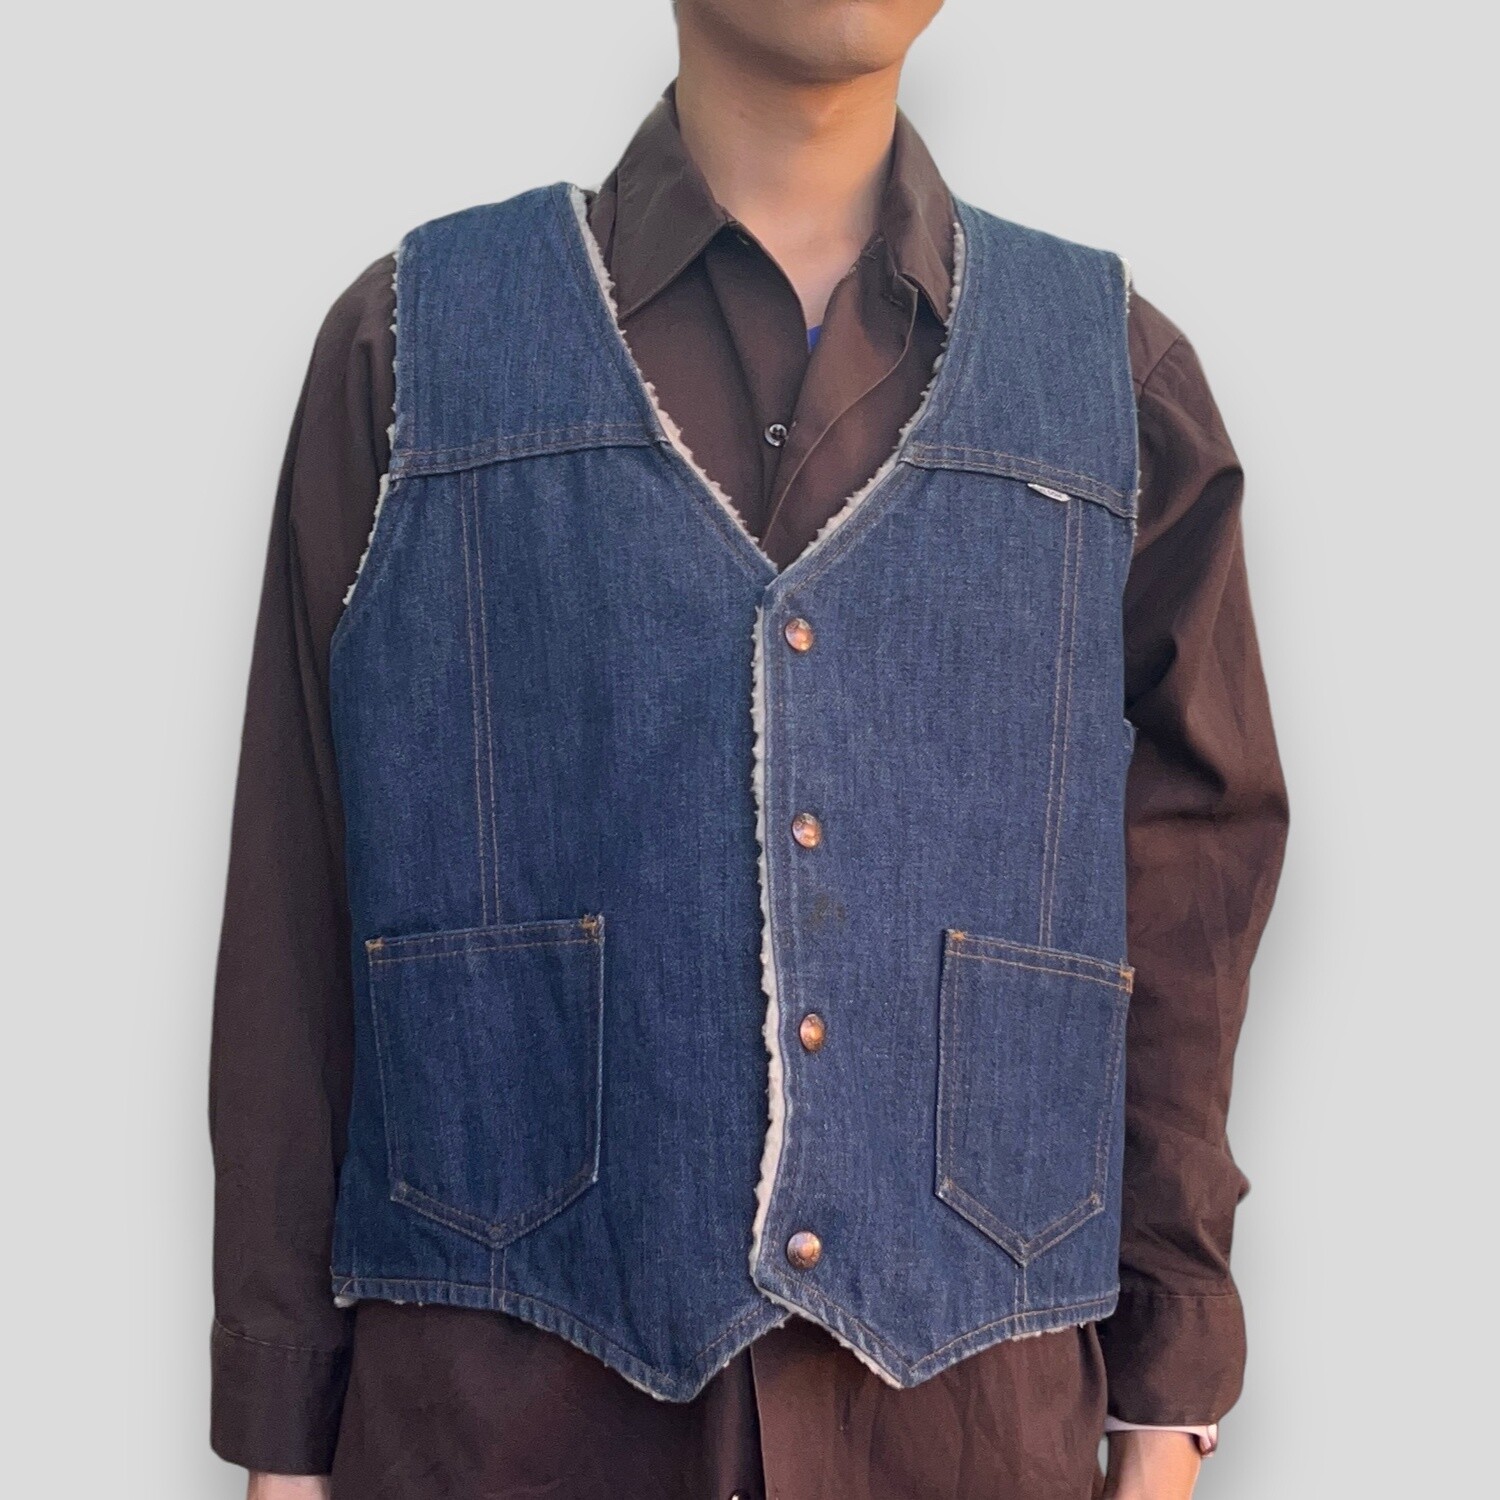 Vintage Nelson Sherpa Denim Vest, Size: Medium, Color: Blue, Style: Vest